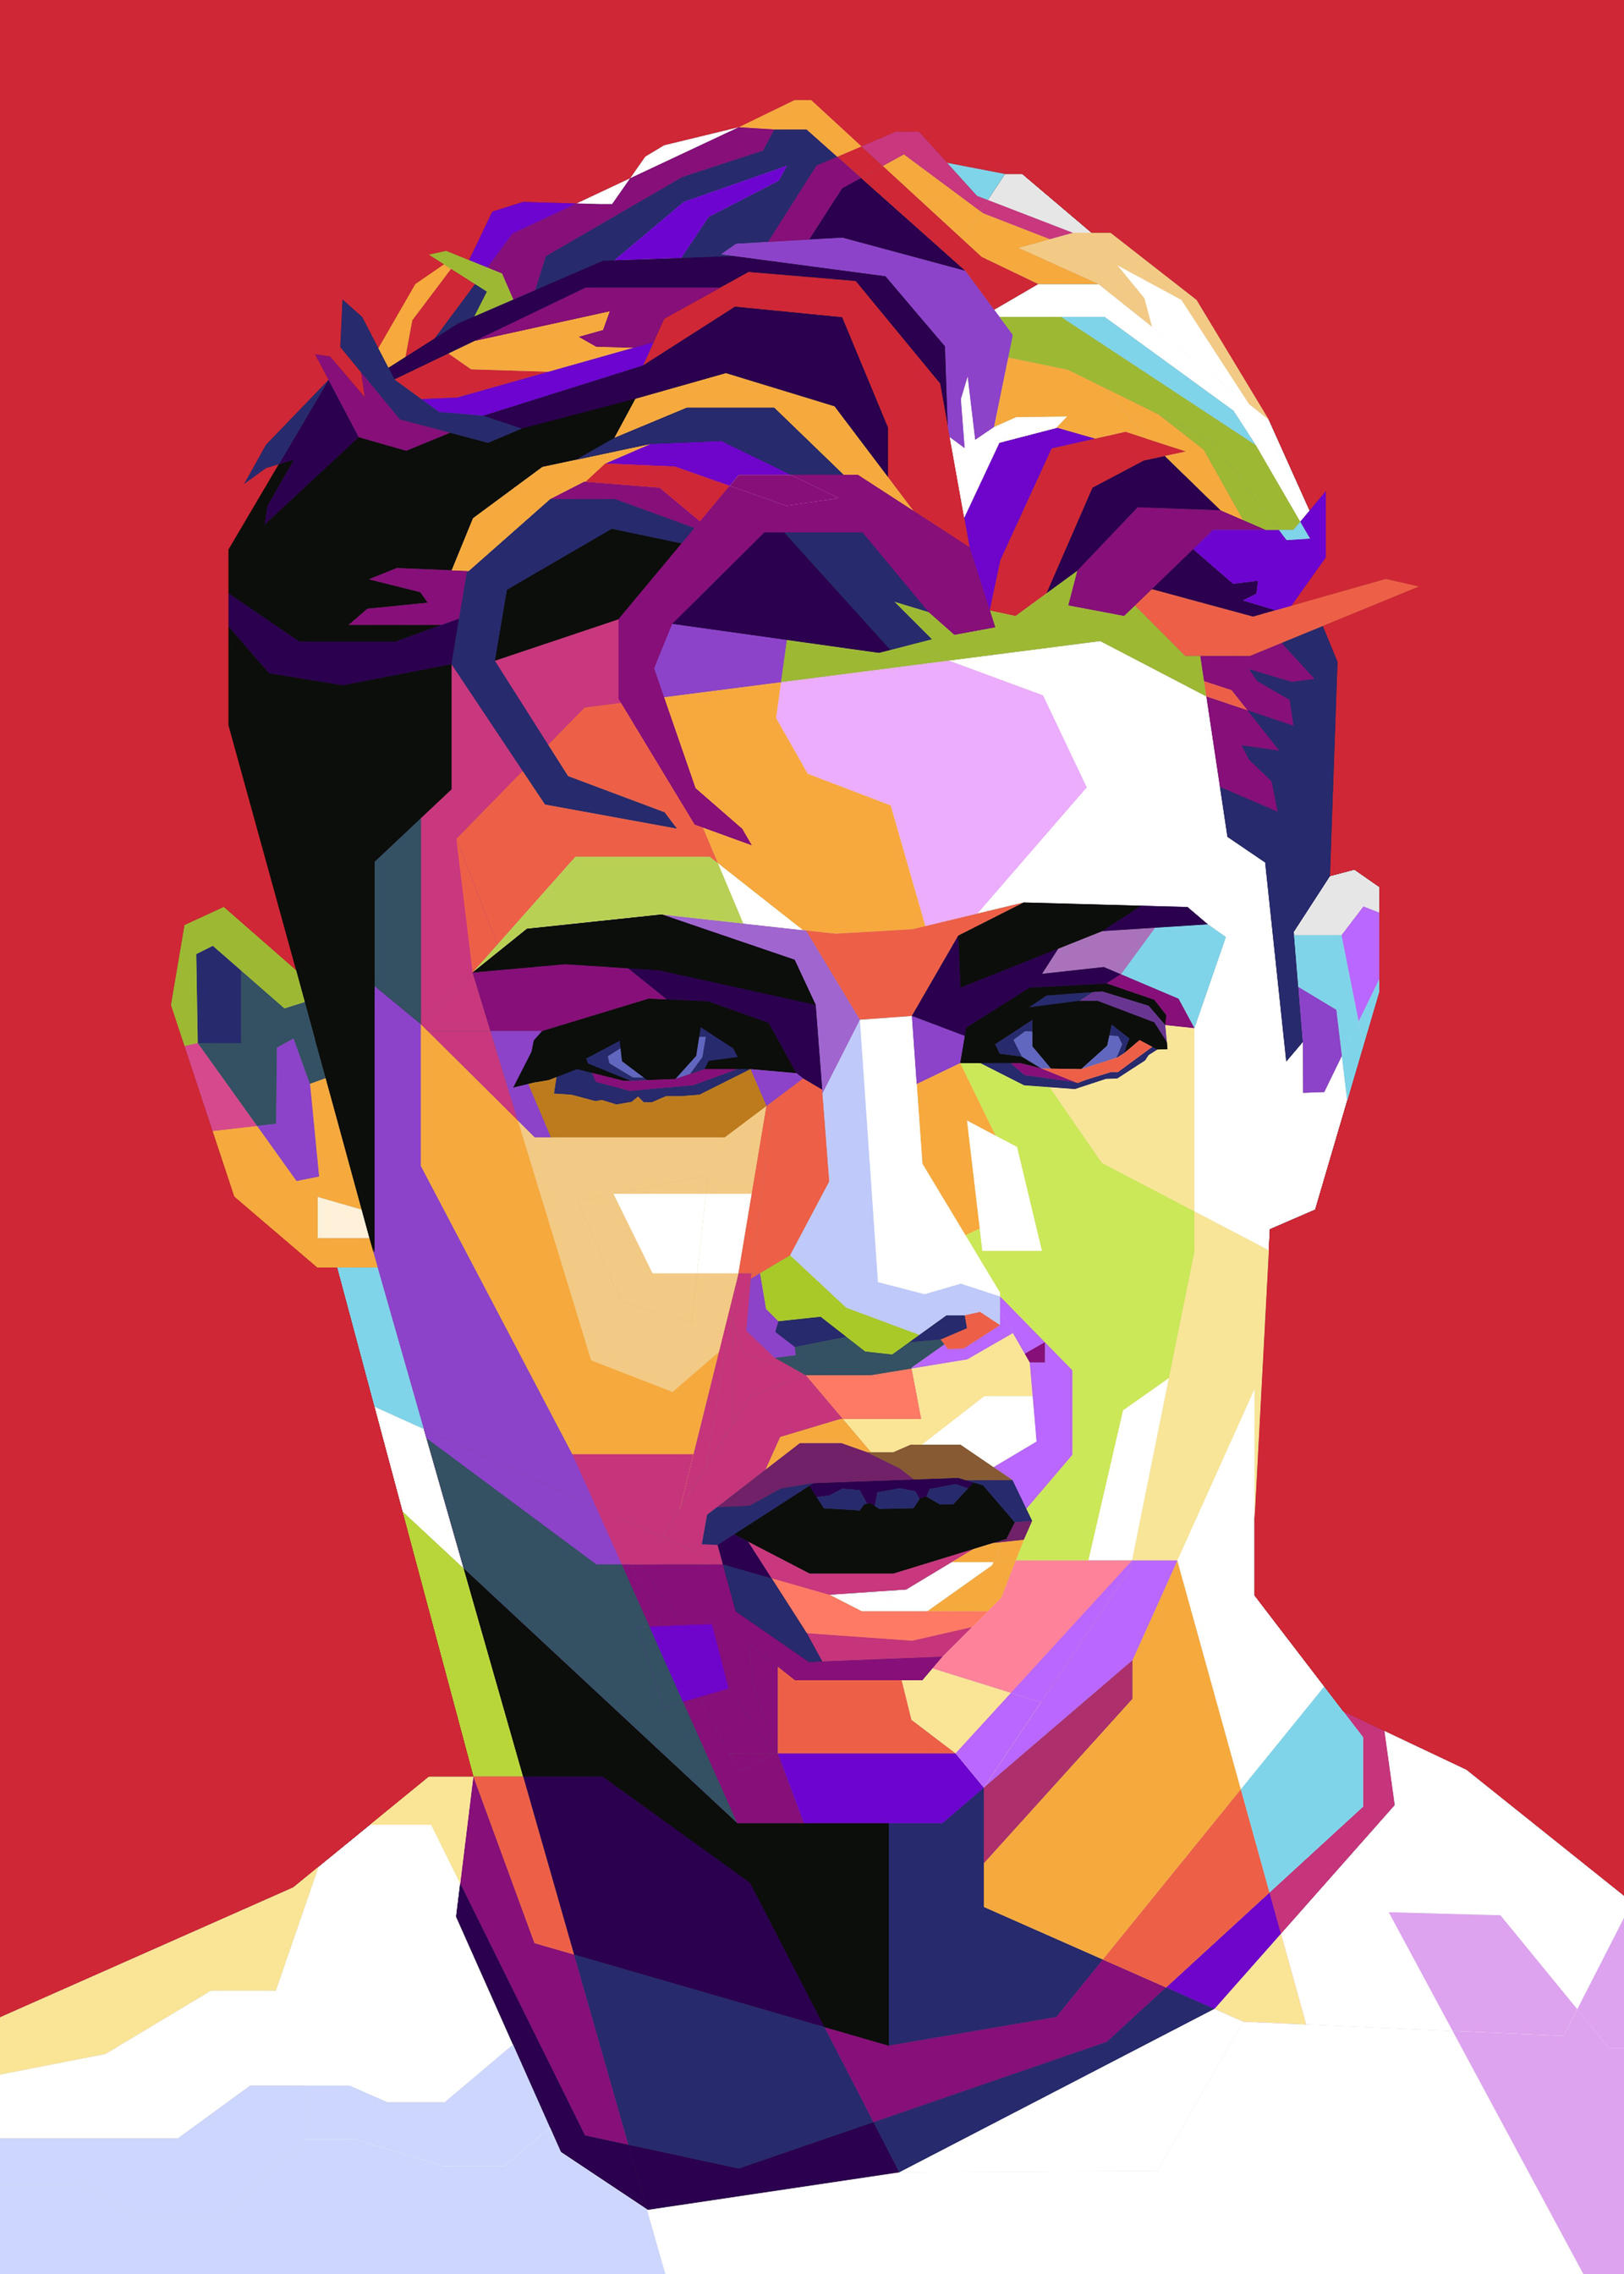 Cristiano Ronaldo Pop Art Portrait by AlKahfiArt on DeviantArt